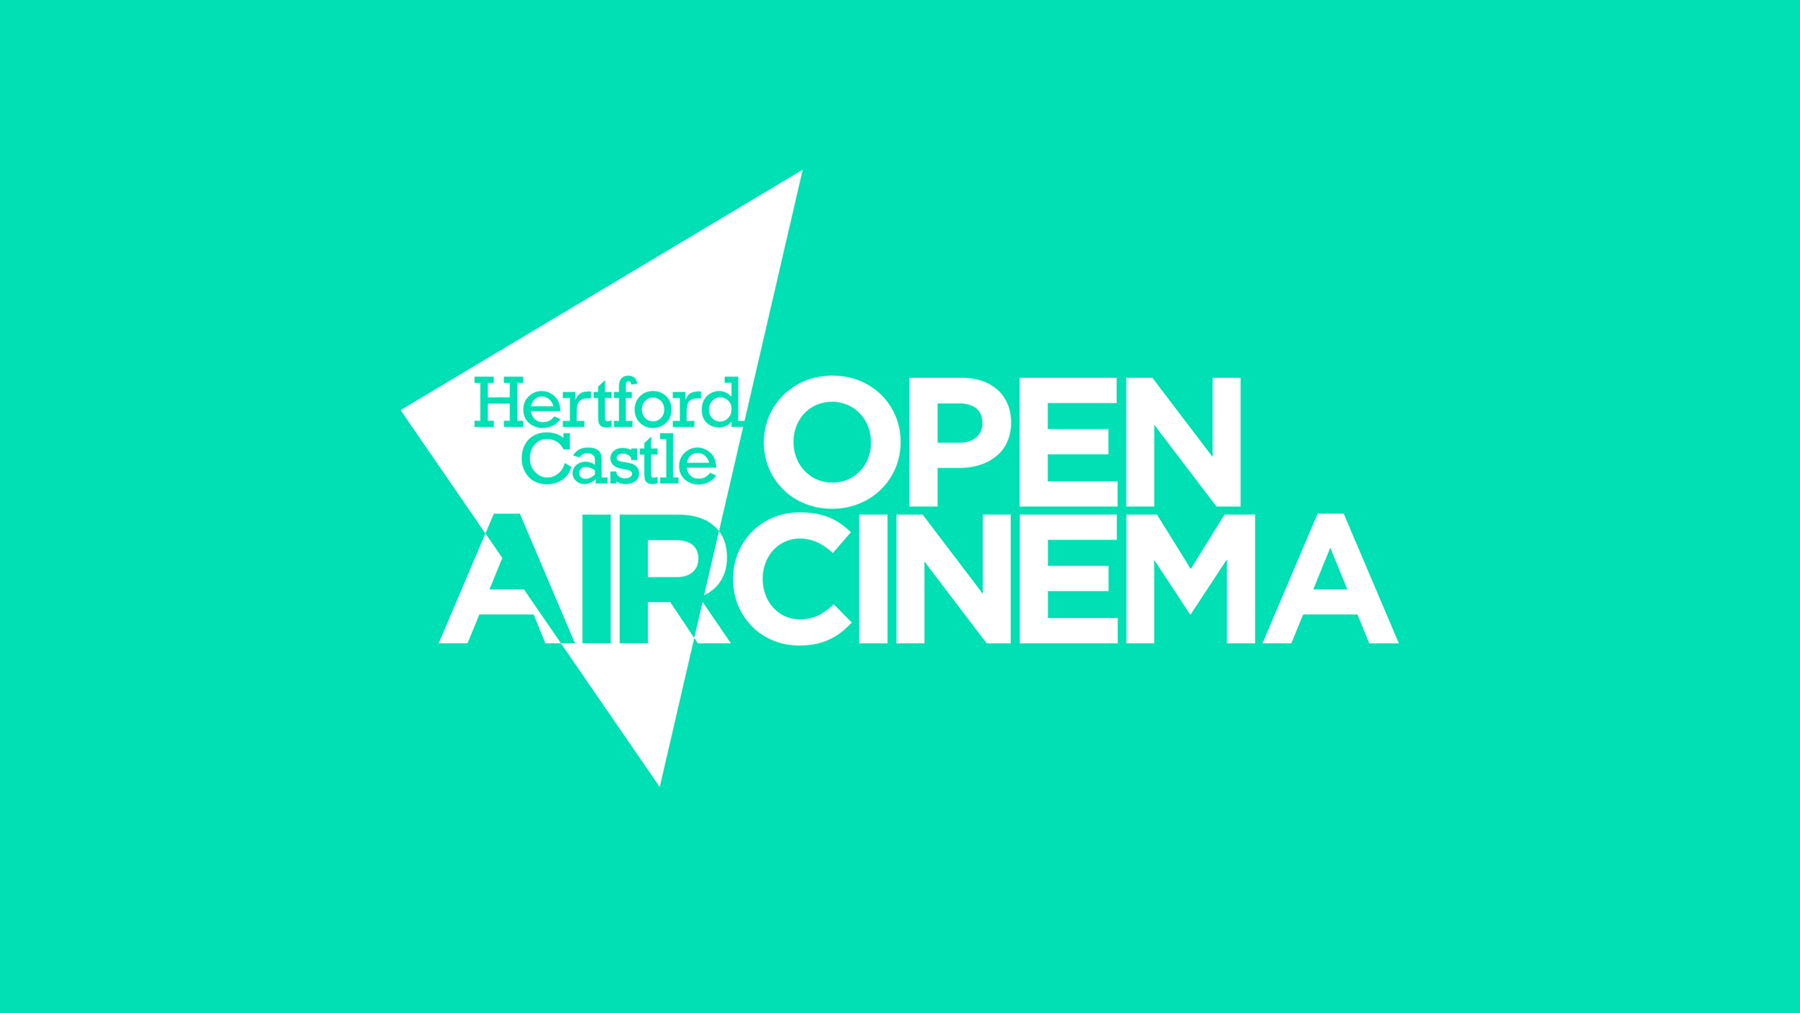 Hertford Castle's open-air cinema brand design over a solid teal background.